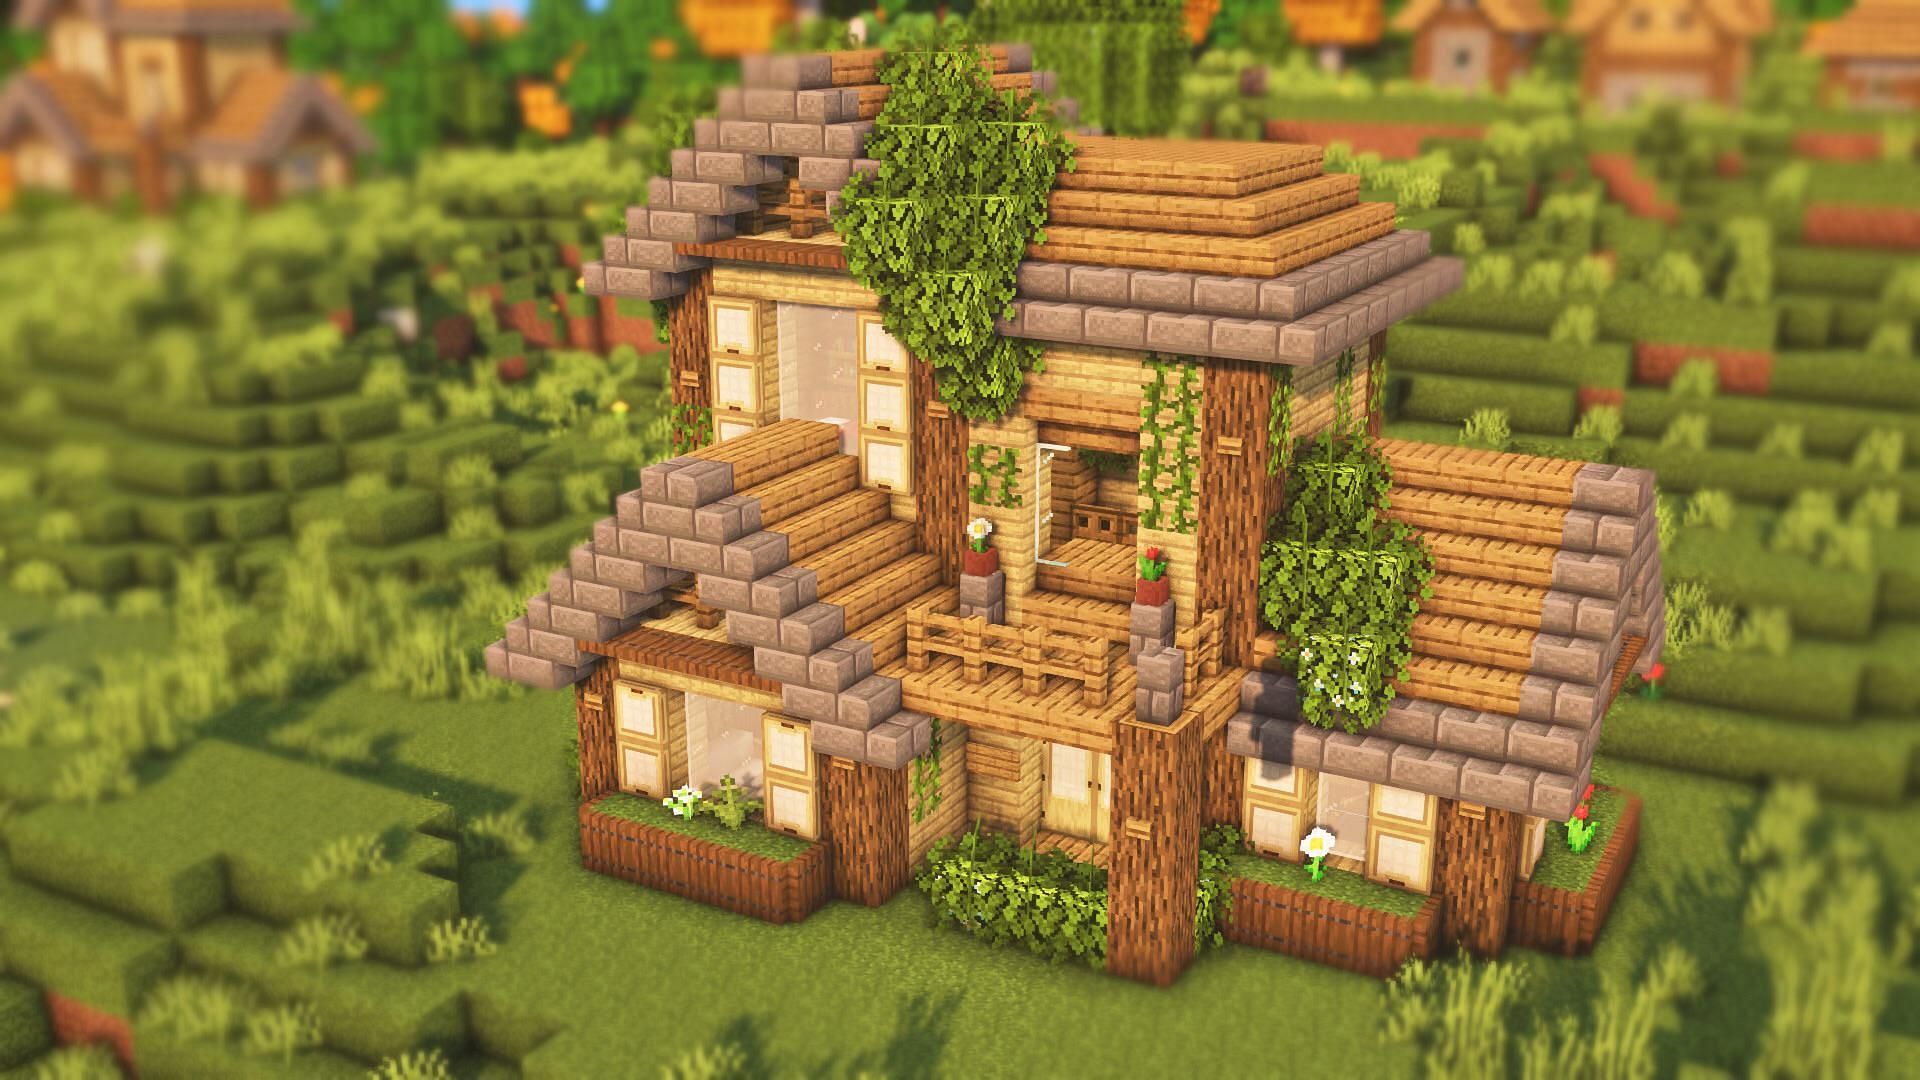 A simple Minecraft cottagecore cabin (Image via Reddit user u/Platinum_Thief)